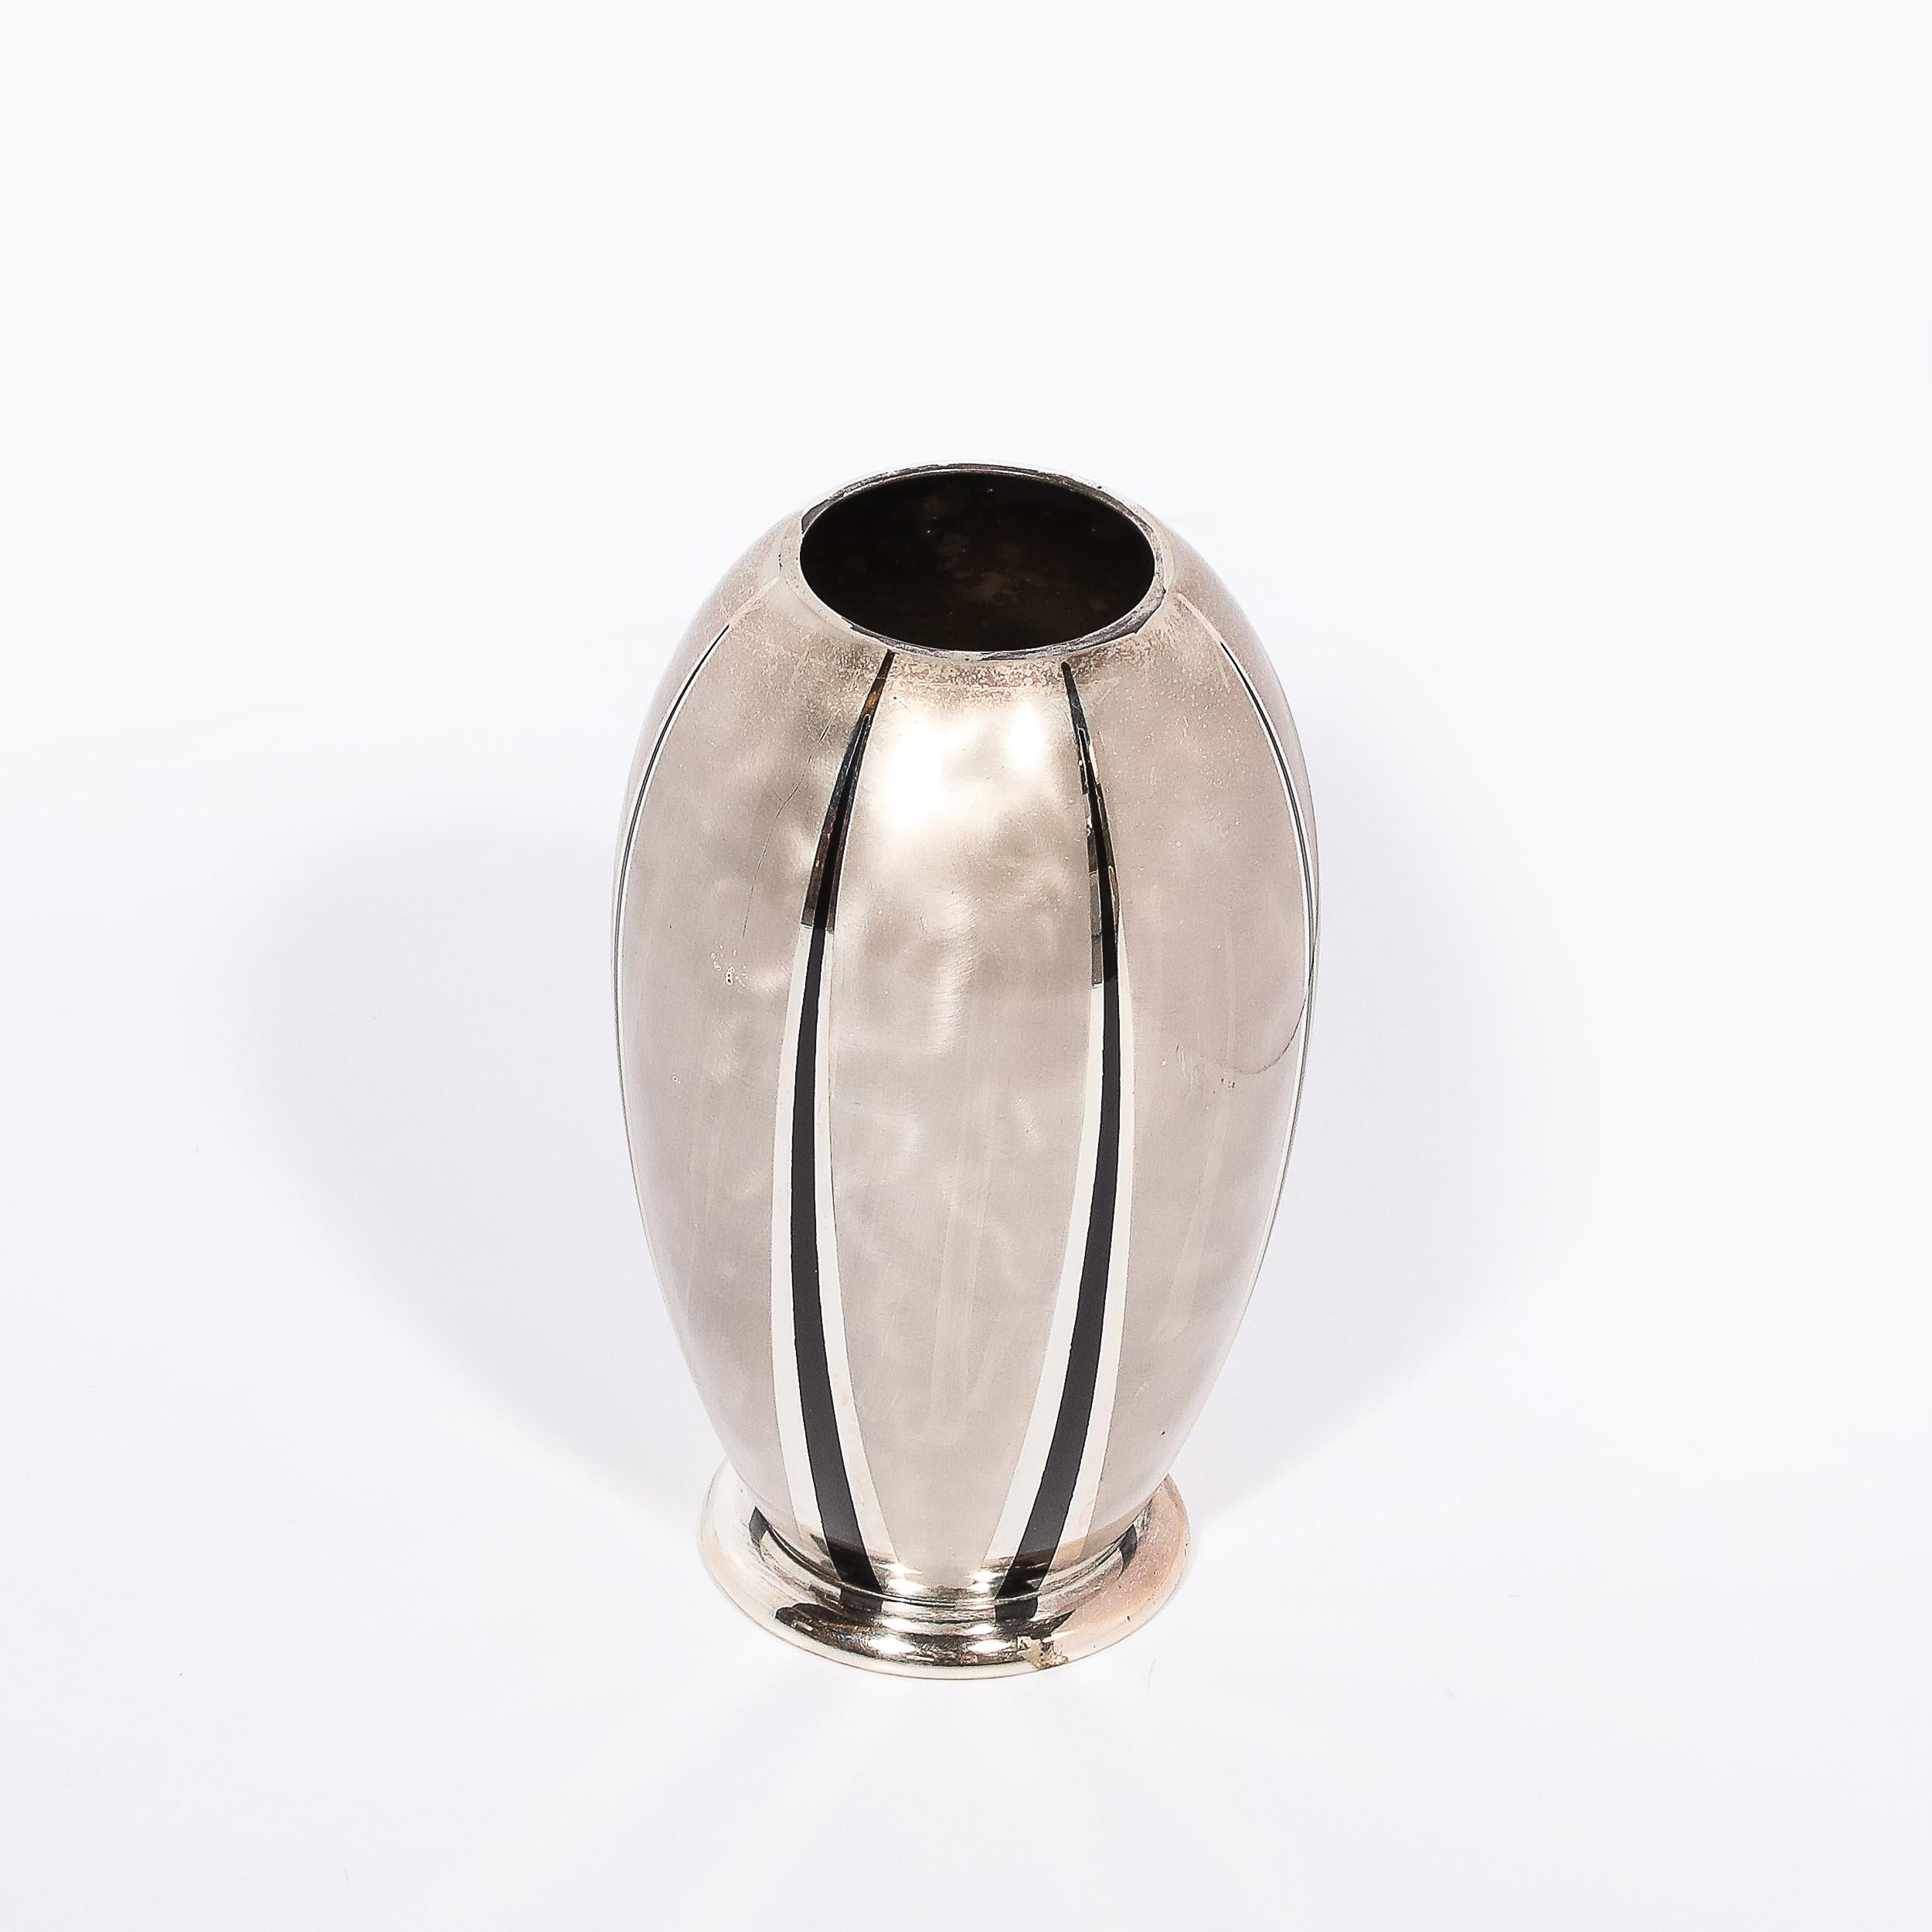 Art Deco WMF Ikora Textural Silver Plated Vase W/ Jet Black Linear Detailing For Sale 8